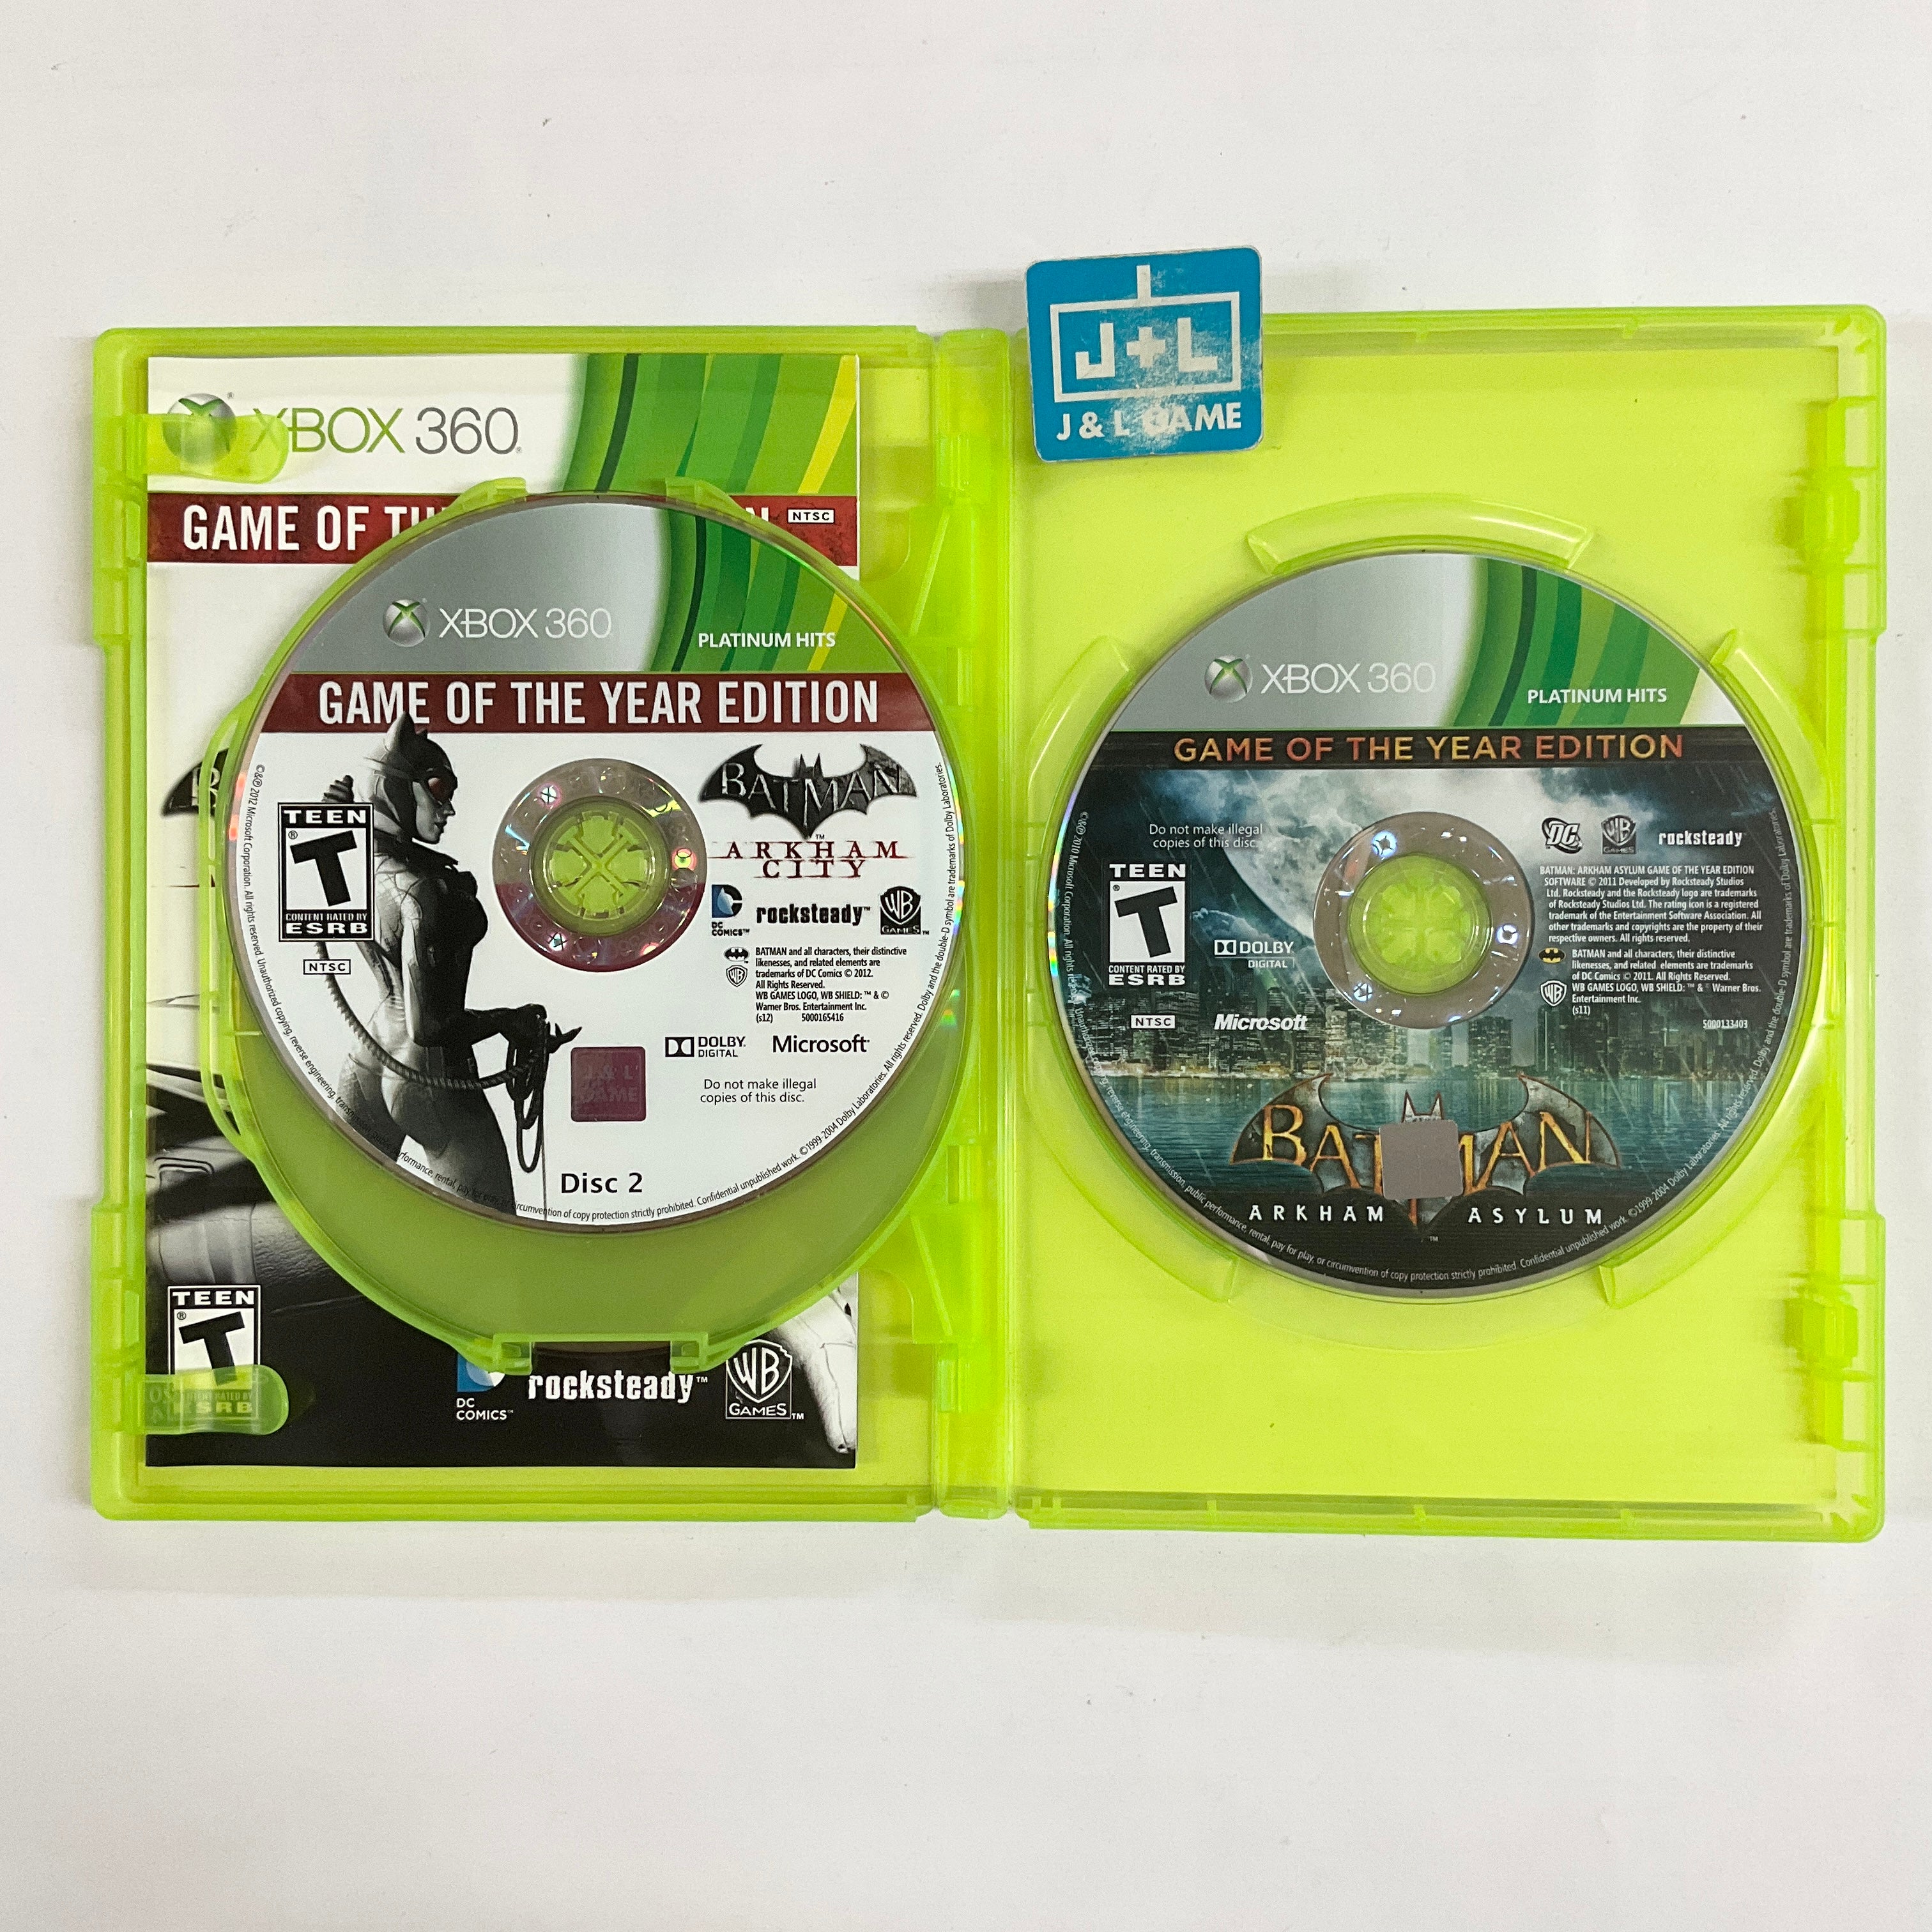 Batman: Arkham Asylum + Batman: Arkham City Dual Pack (Platinum Hits) - Xbox 360 [Pre-Owned] Video Games Warner Bros. Interactive Entertainment   